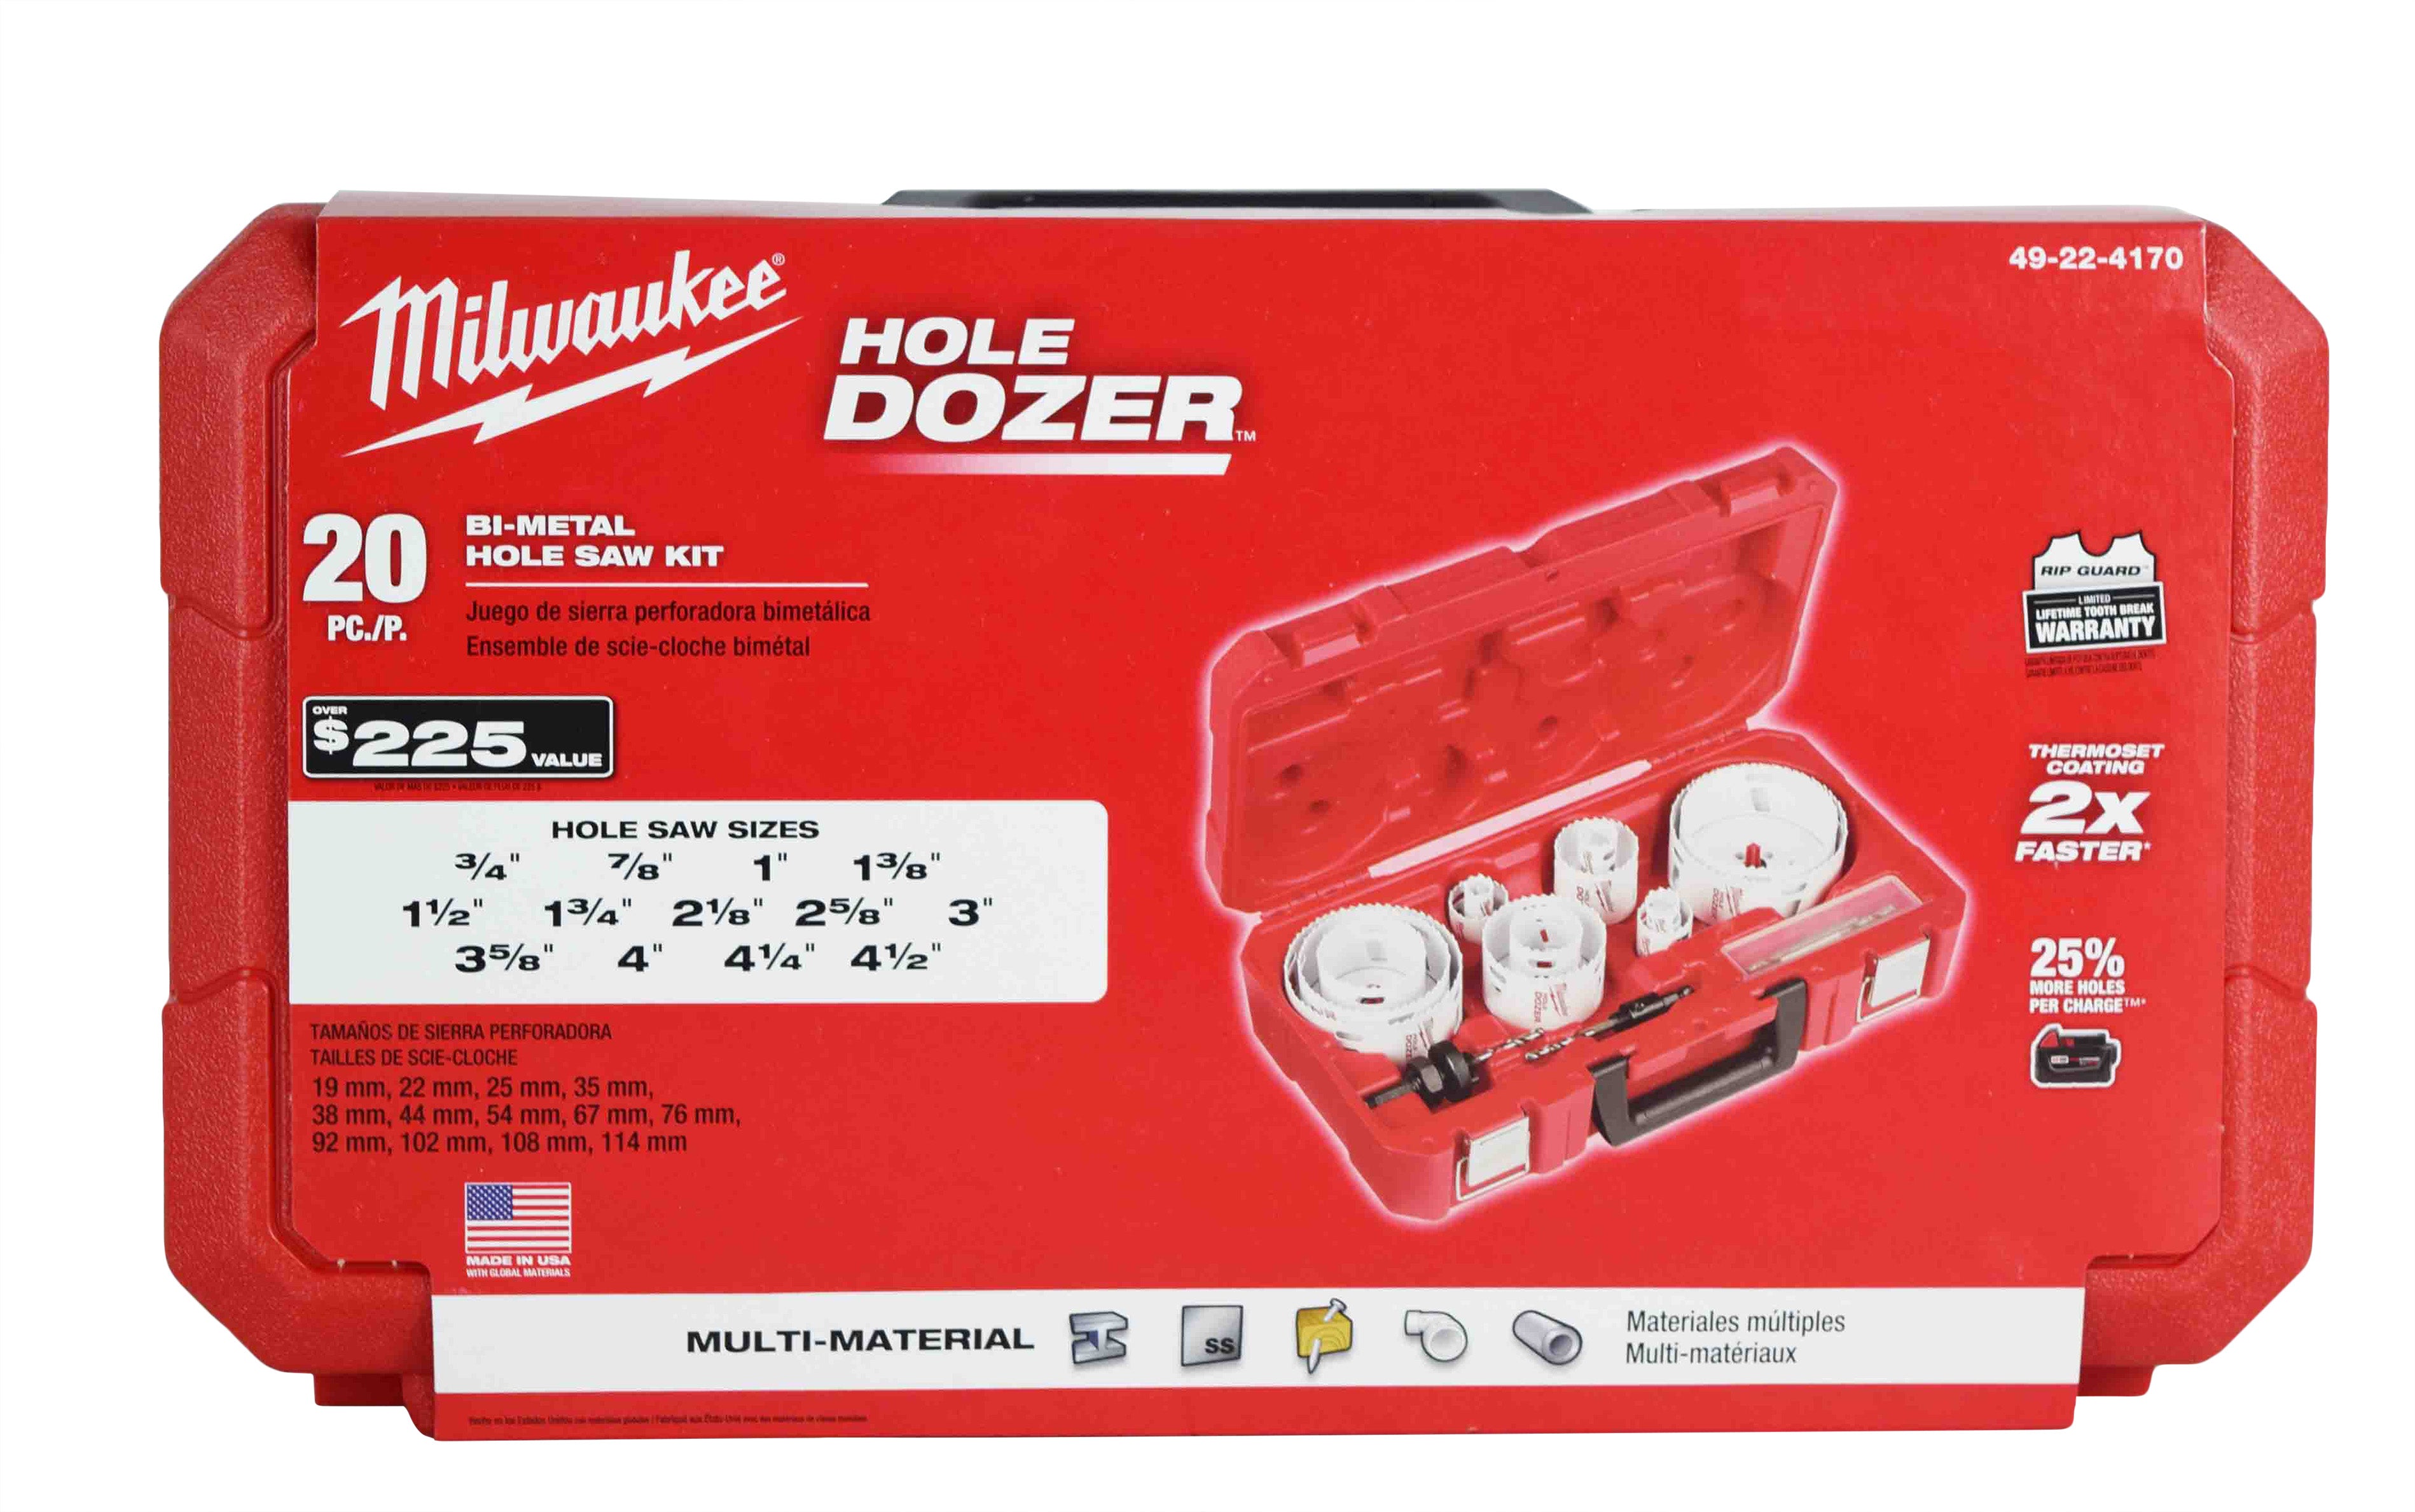 Milwaukee 49-22-4170 Hole Dozer General Purpose Bi-Metal Hole Saw Set (20-Piece)